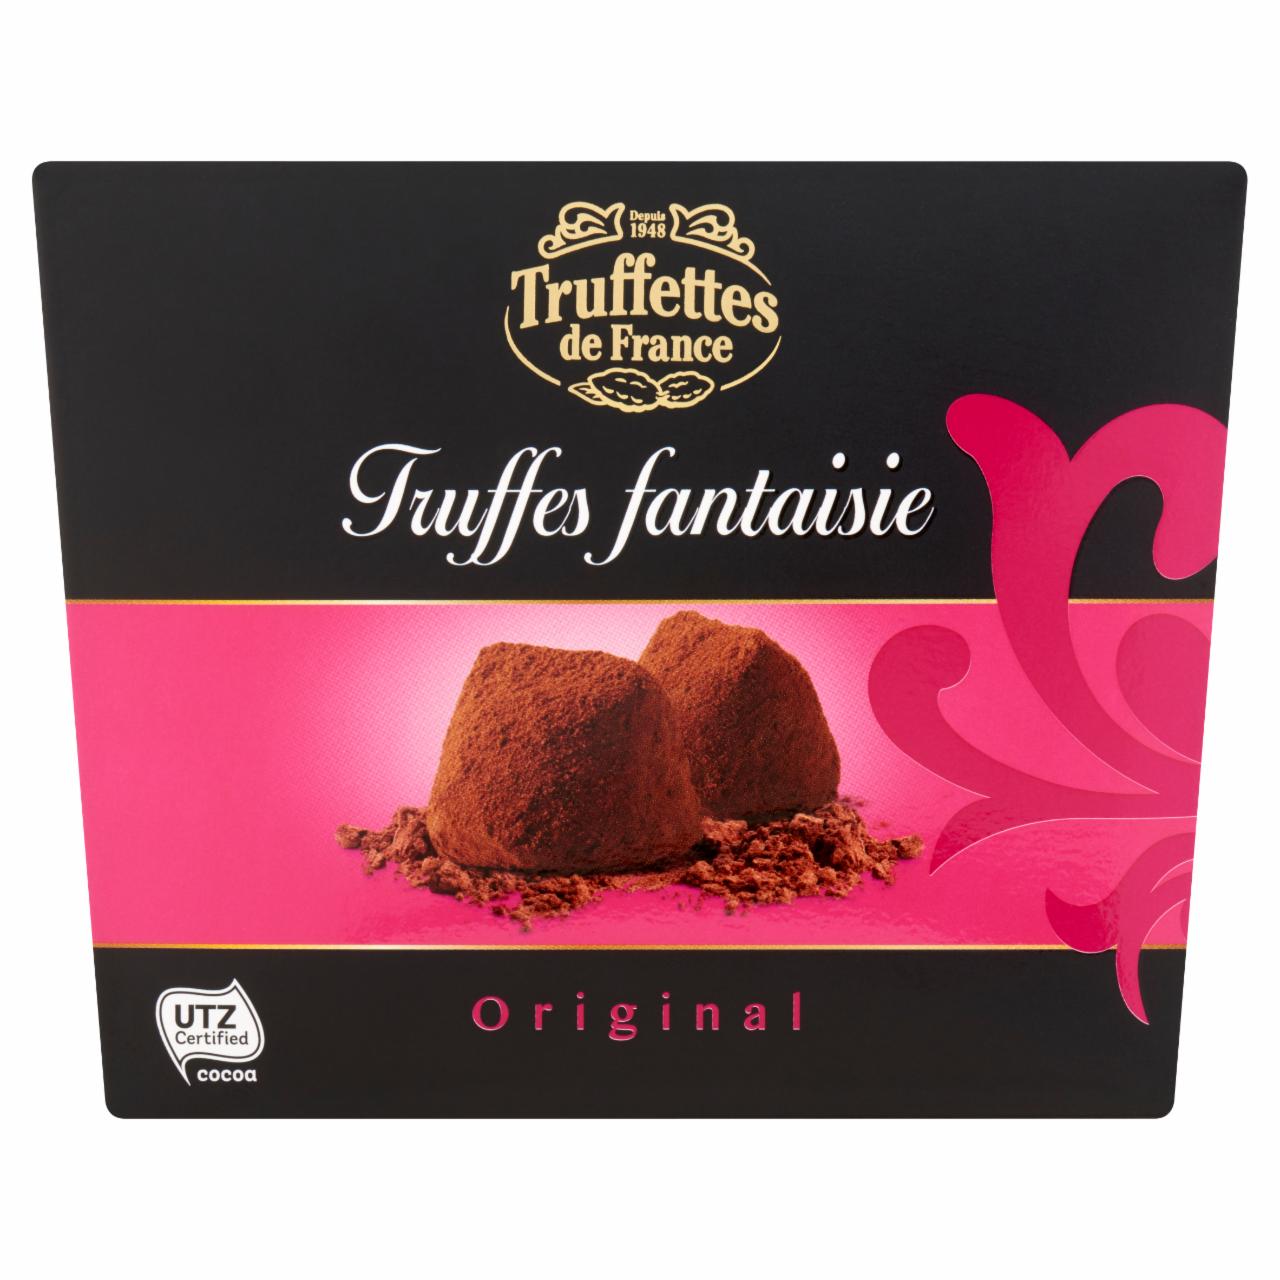 Képek - Truffettes de France kakaóporral borított trüffel 200 g